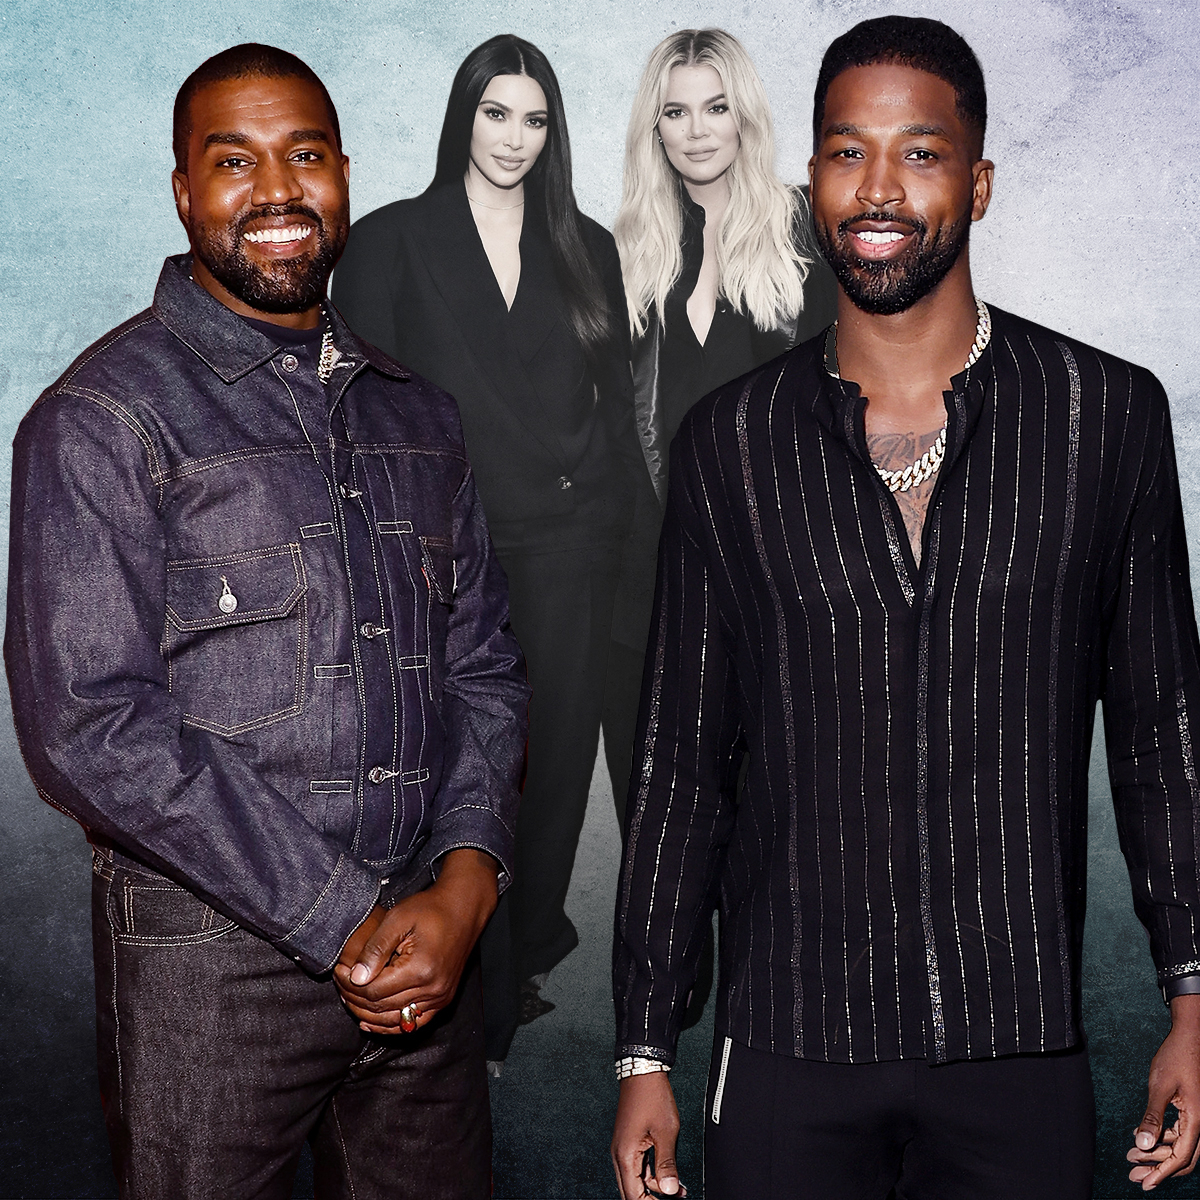 Kim Kardashian Booes Khloe's Ex Tristan Thompson With Kanye West